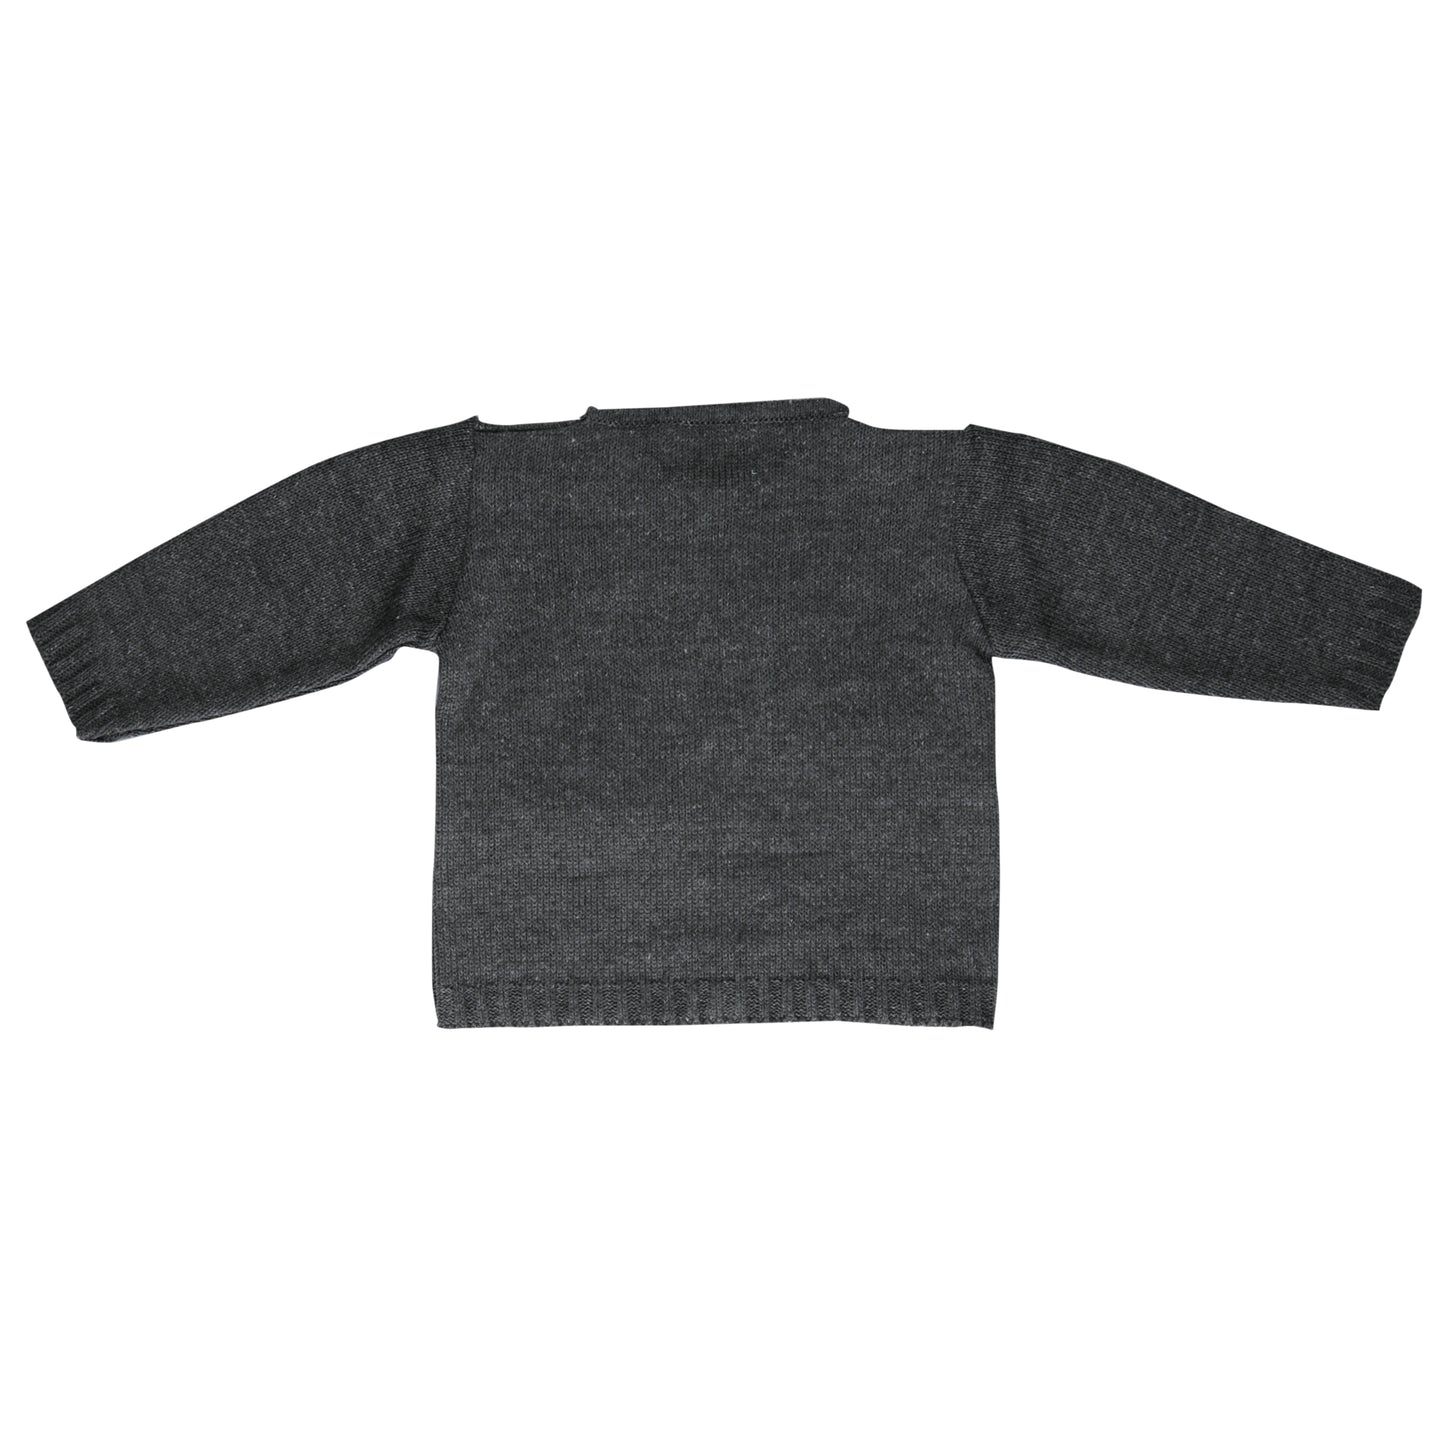 Cardigan bebê masculino tricot cinza mescla - 9936